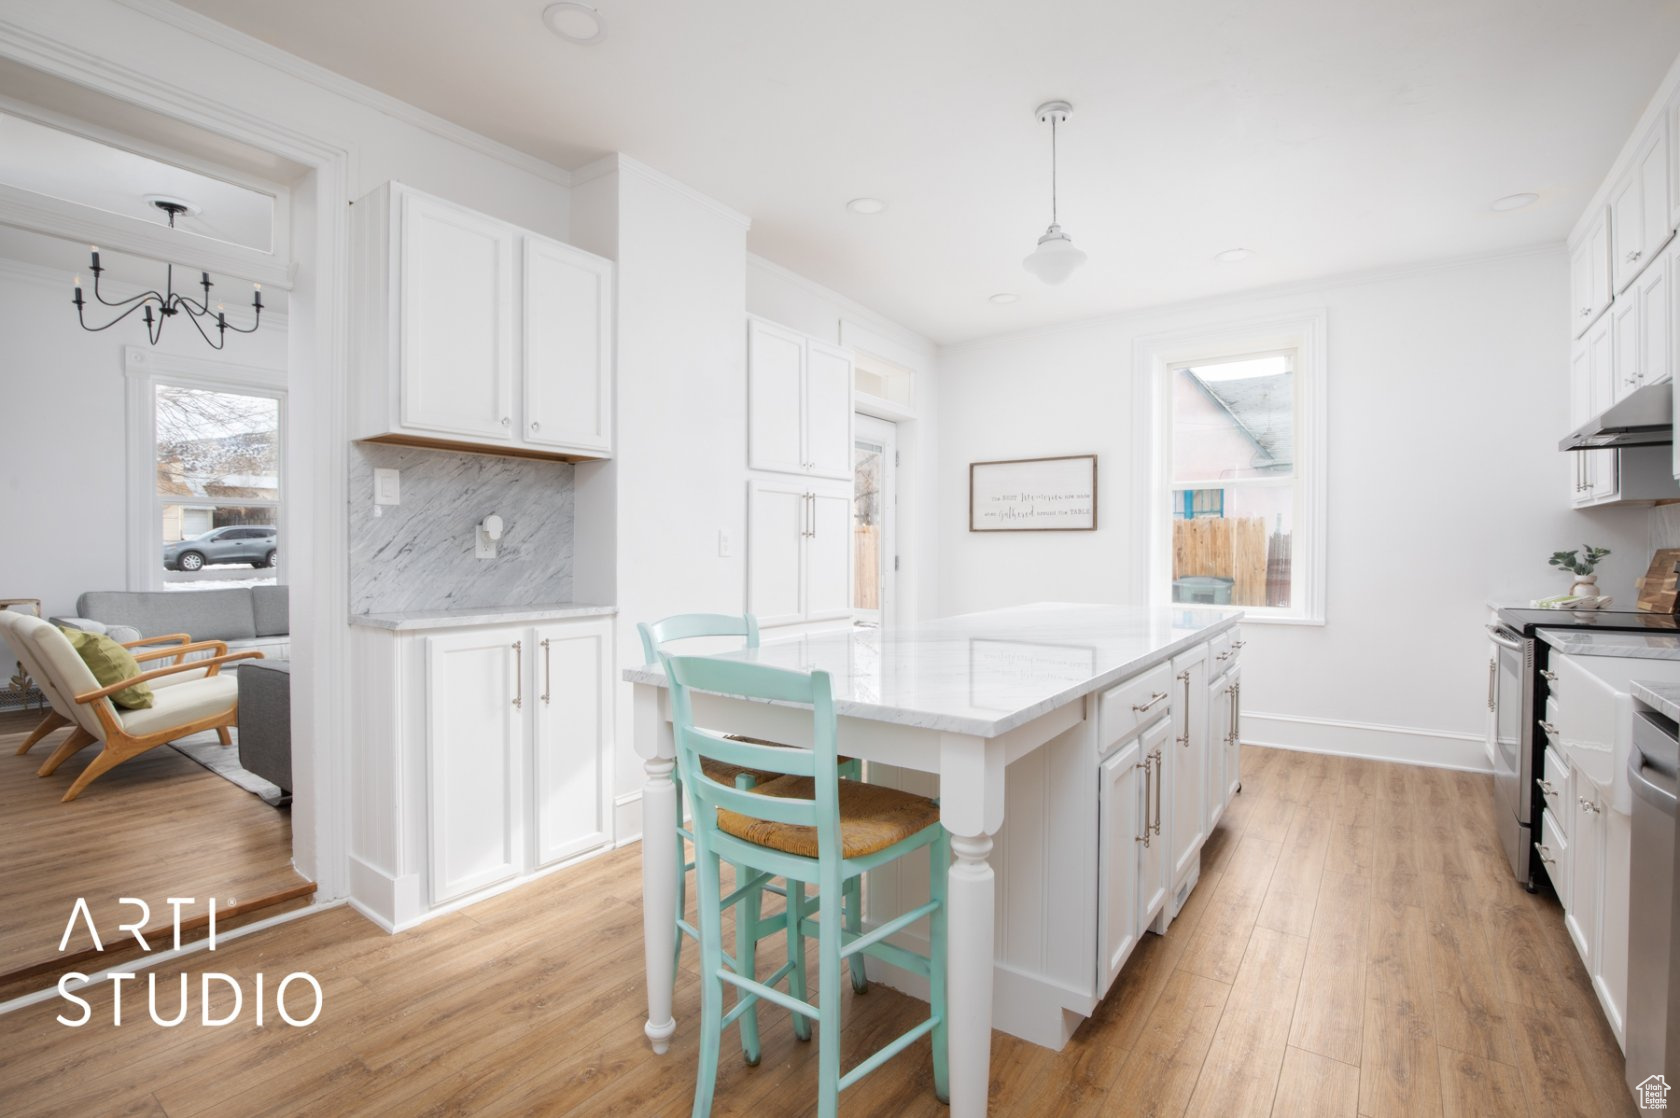 Kitchen with white cabinets, decorative light fixtures, backsplash, and light wood-type flooring